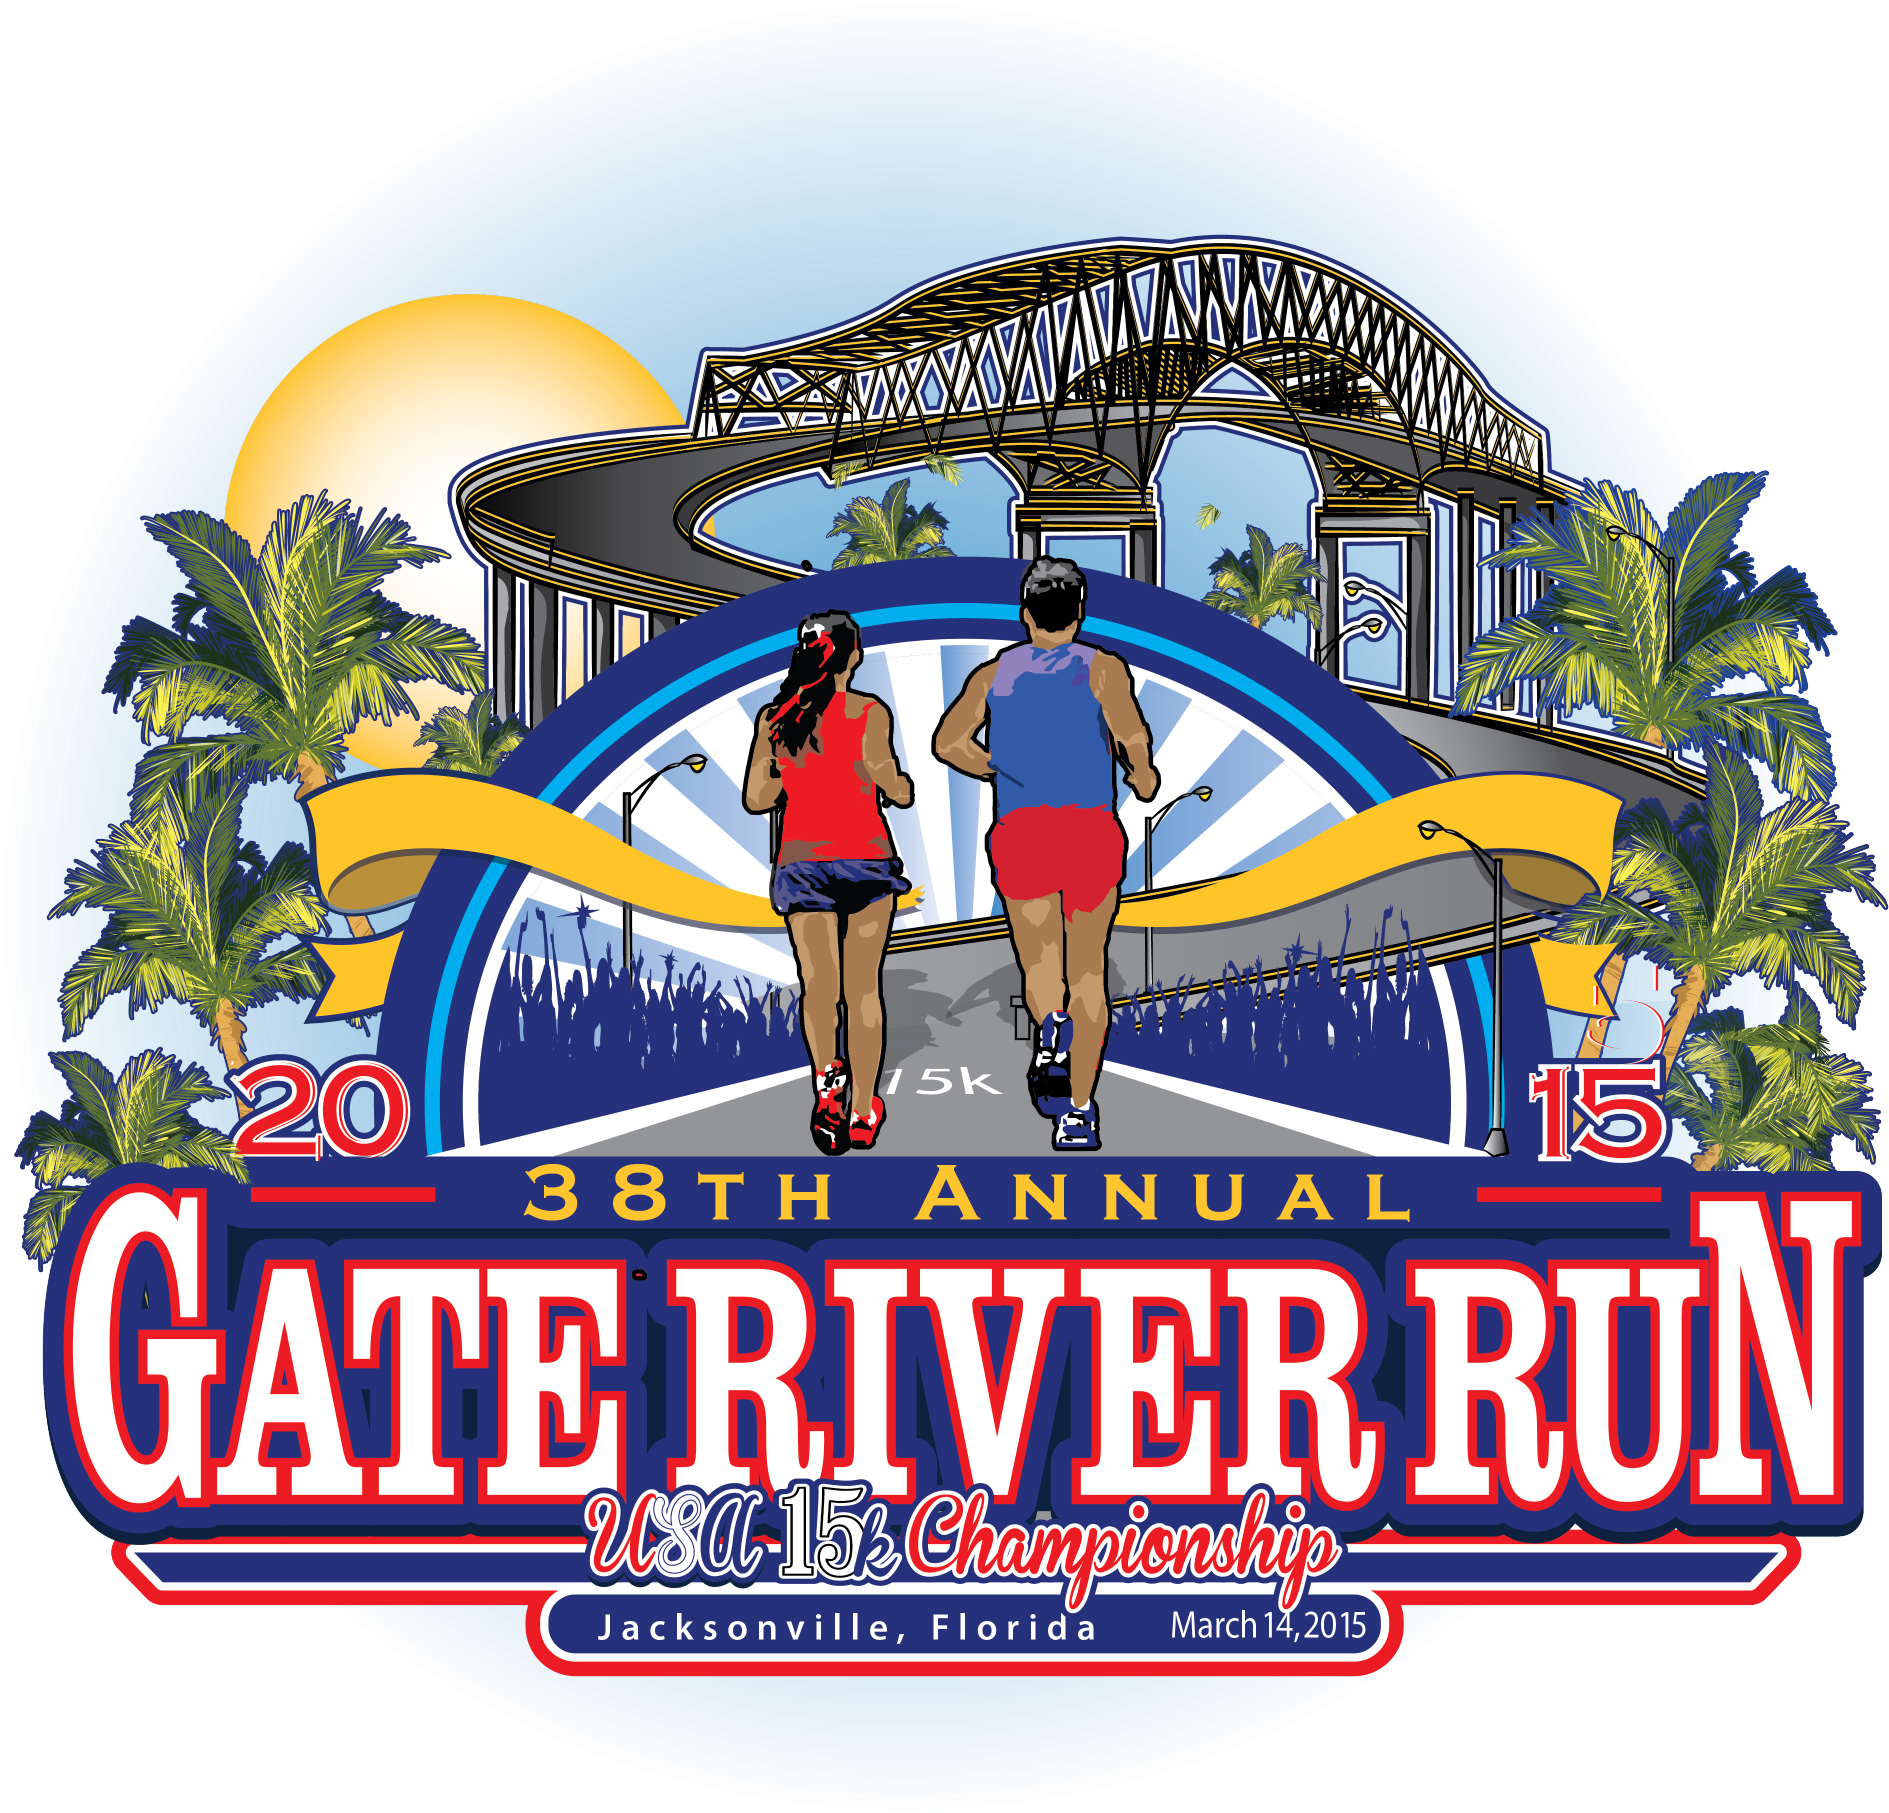 Gate River Run Art Sample By Get'n Graphic Design - Big Cypress Swamp (2100x2100)